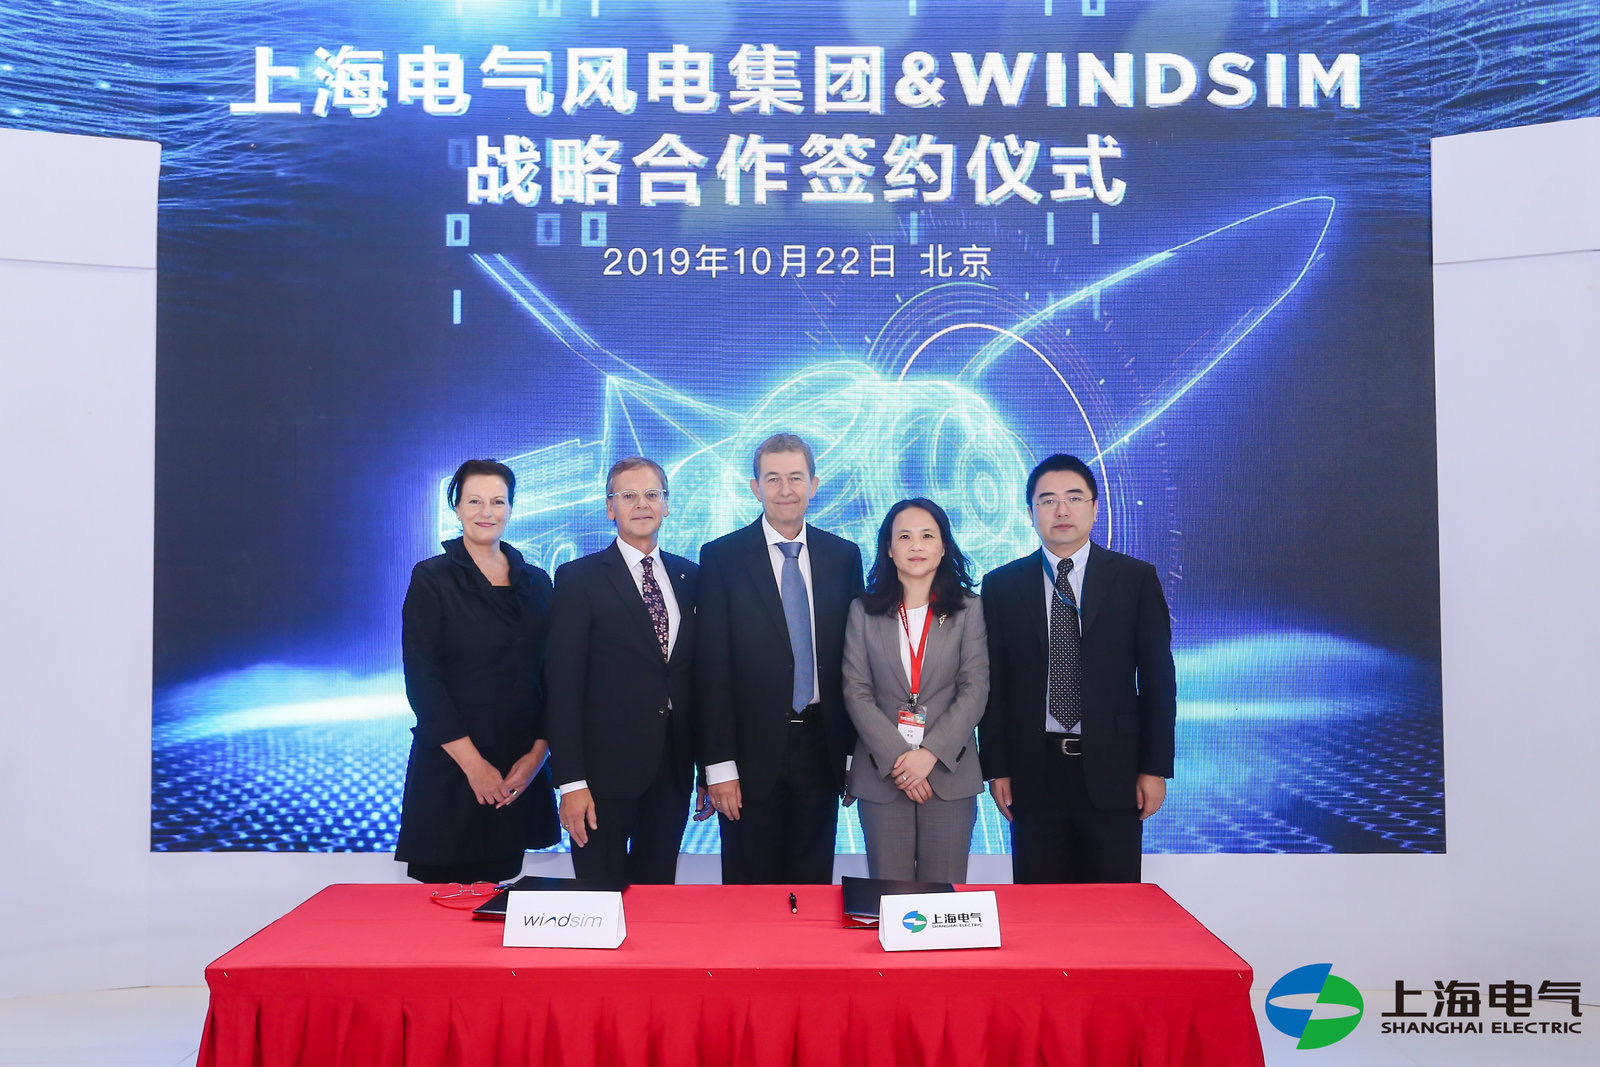 SEWPG WindSim strategic partnership ceremony